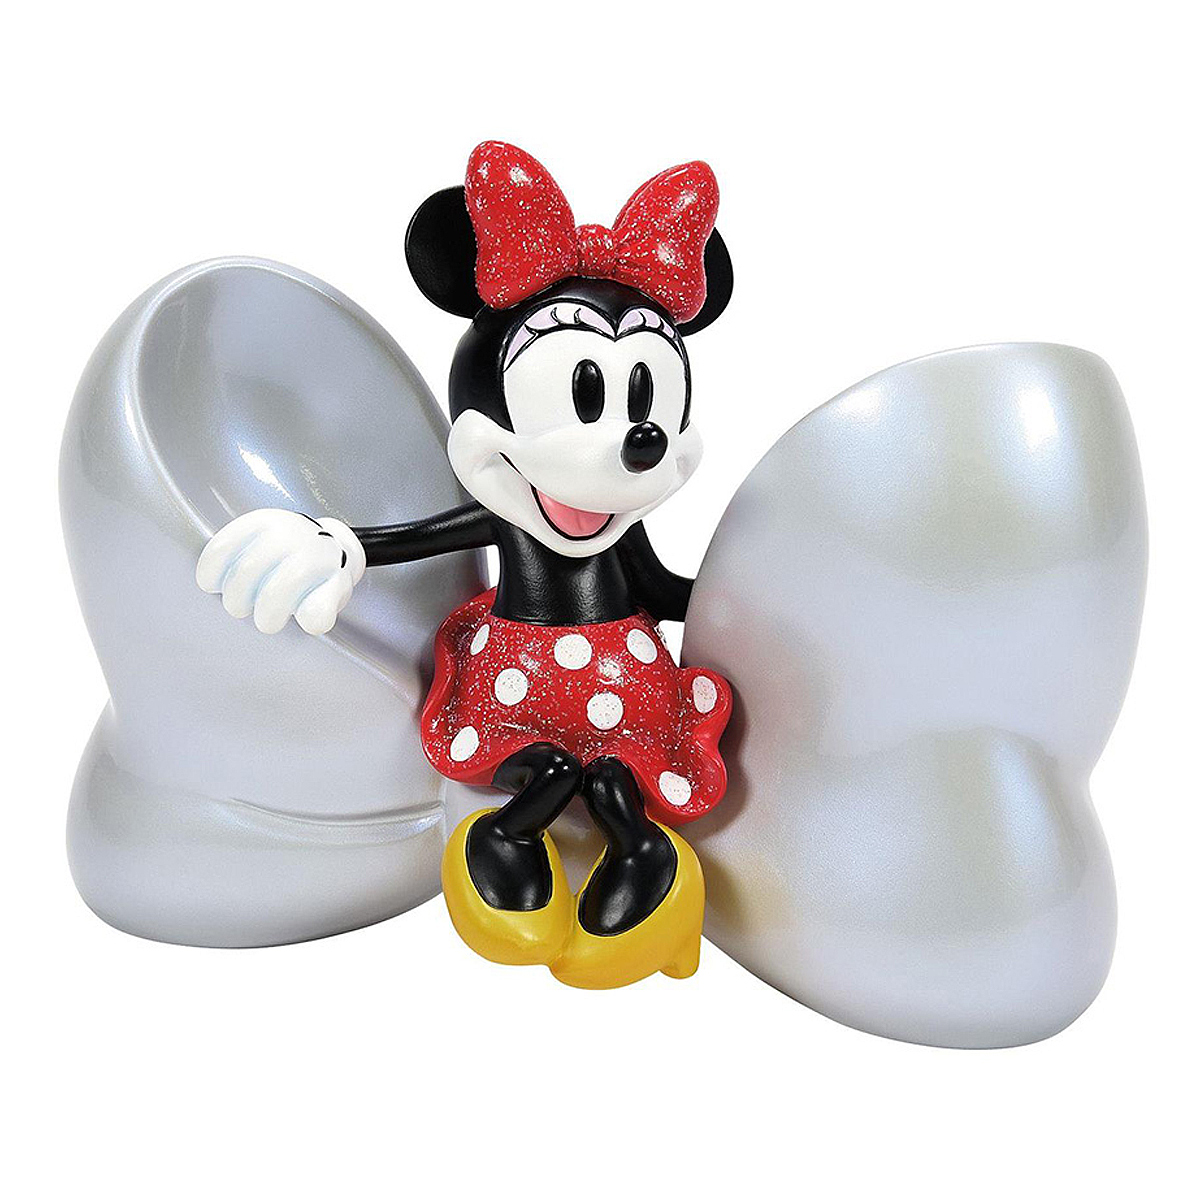 Disney100 ディズニーショーケース Disney Showcase ミニーマウス フィギュア 置物 インテリア オブジェ 6013125 100周年記念 限定ディズ